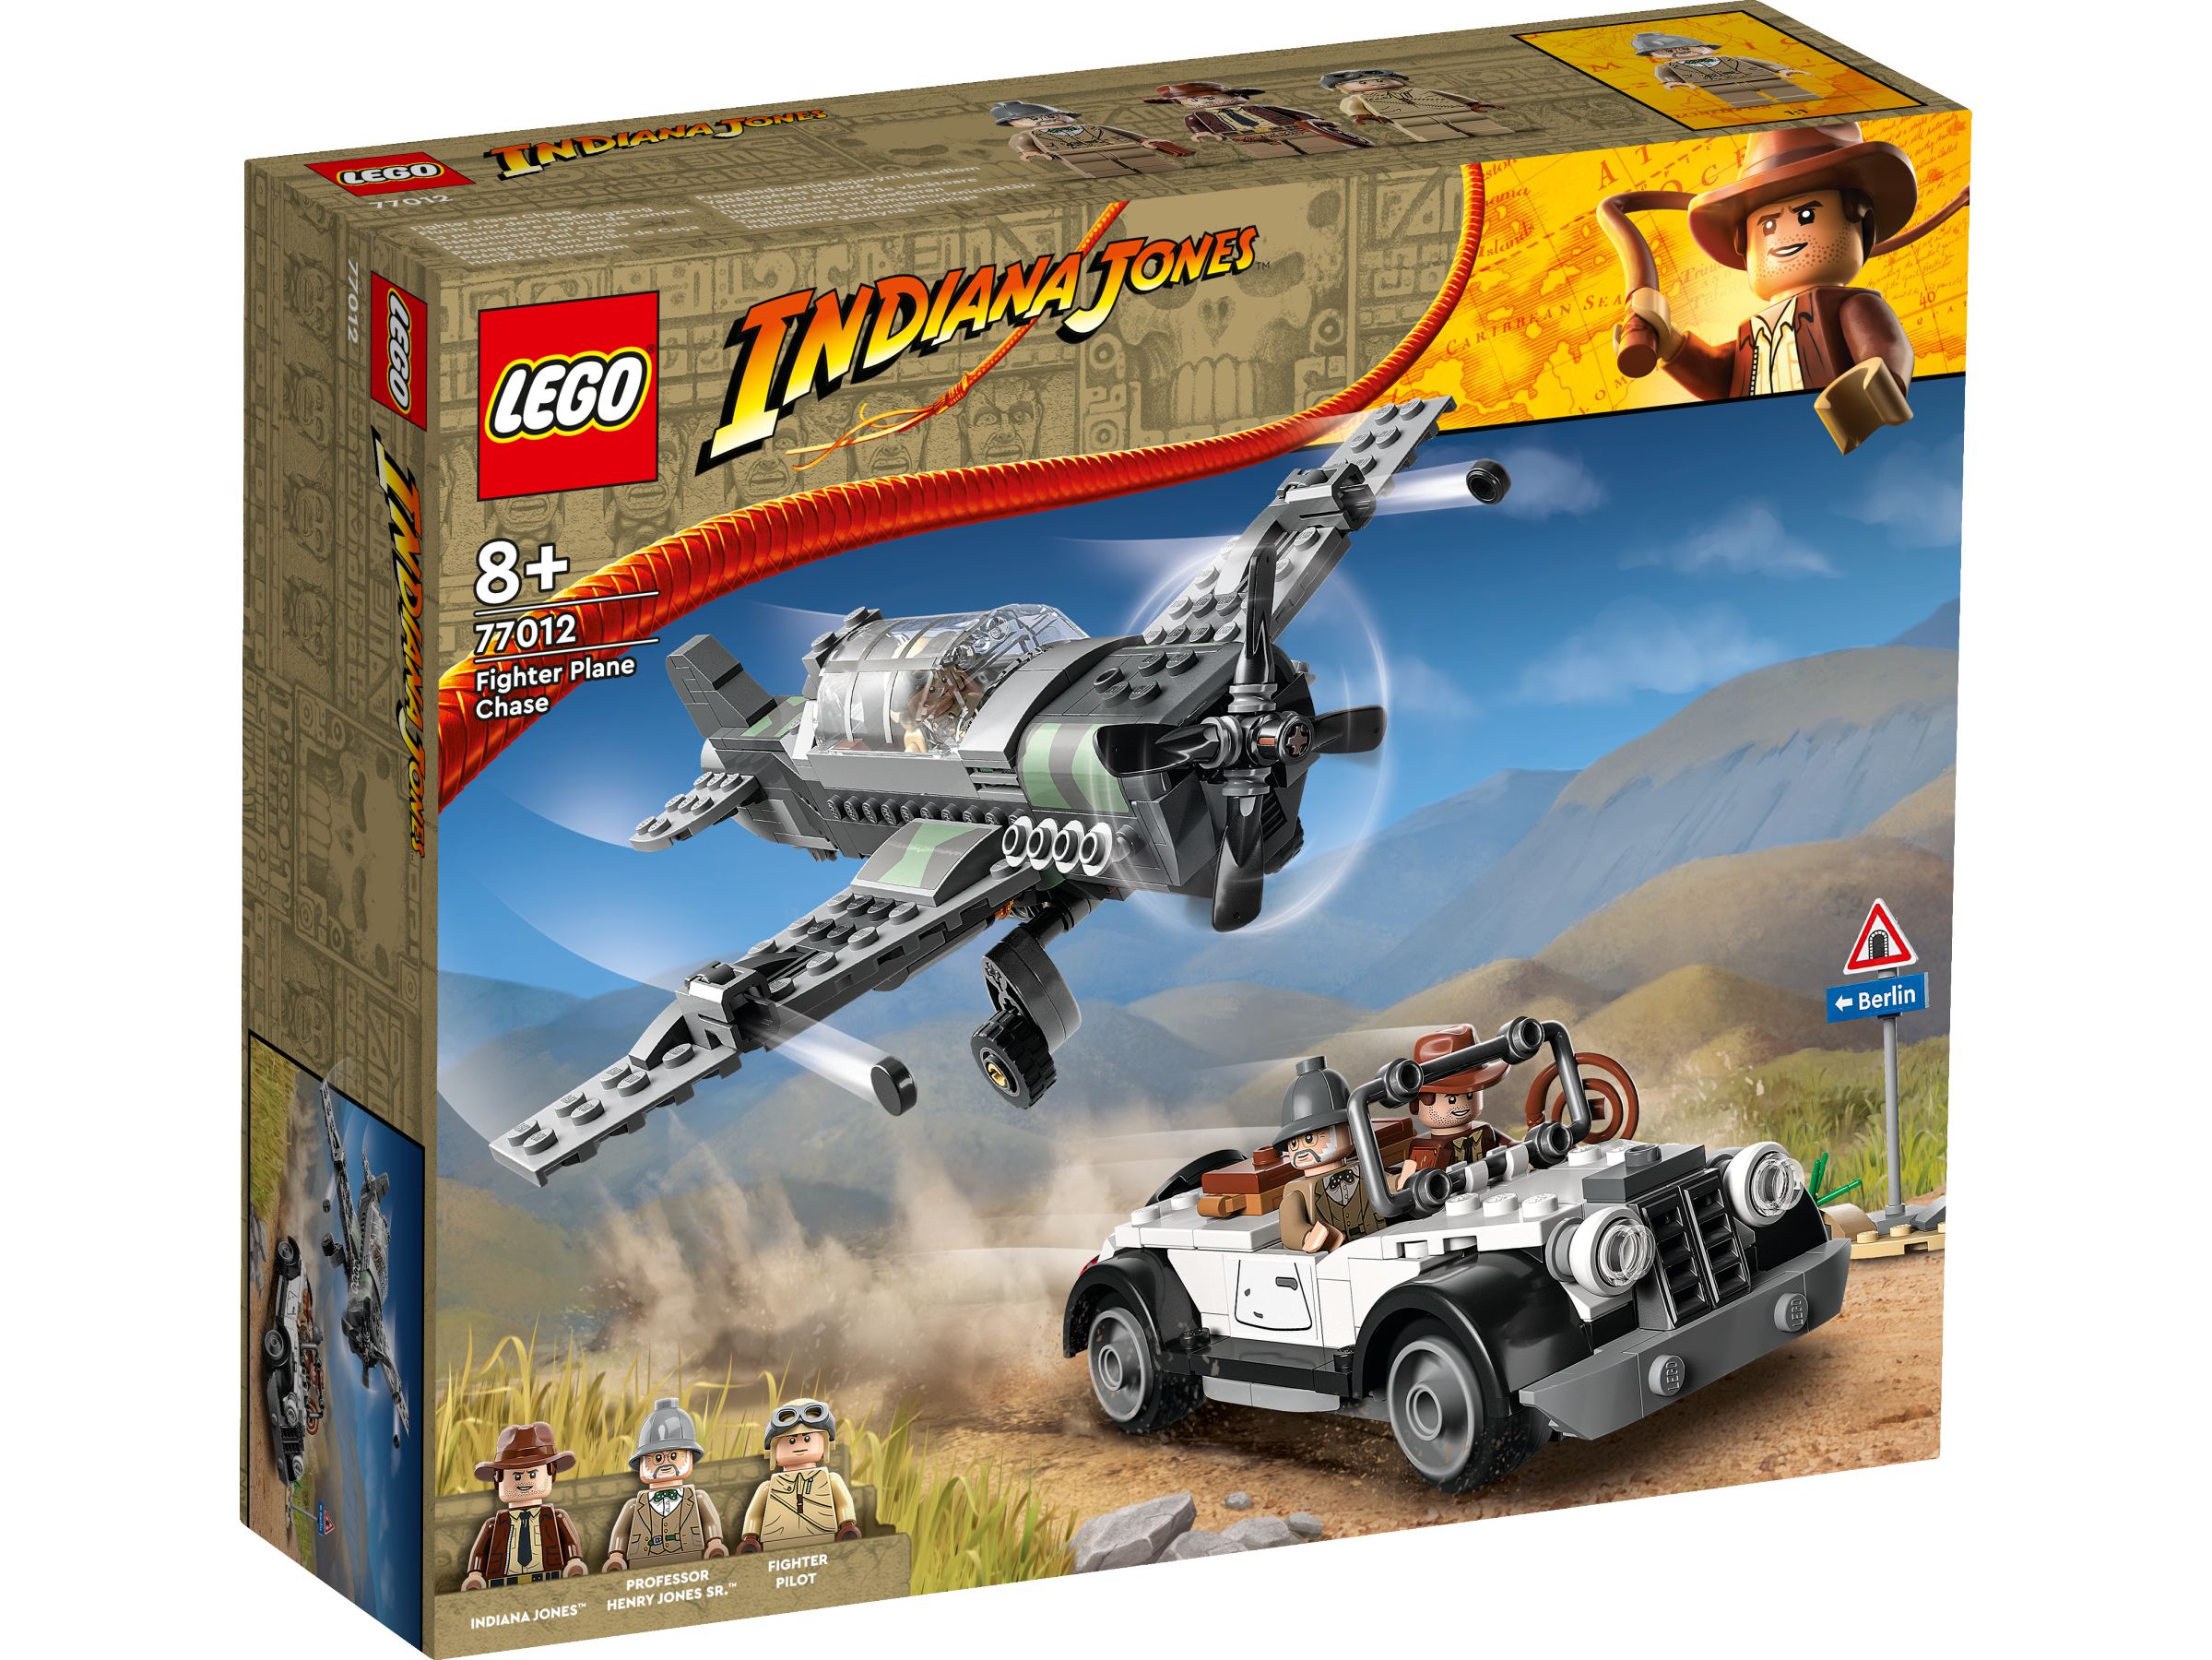 LEGO Indiana Jones 77012 Flucht vor dem Jagdflugzeug LEGO_77012_Box1_v29.jpg